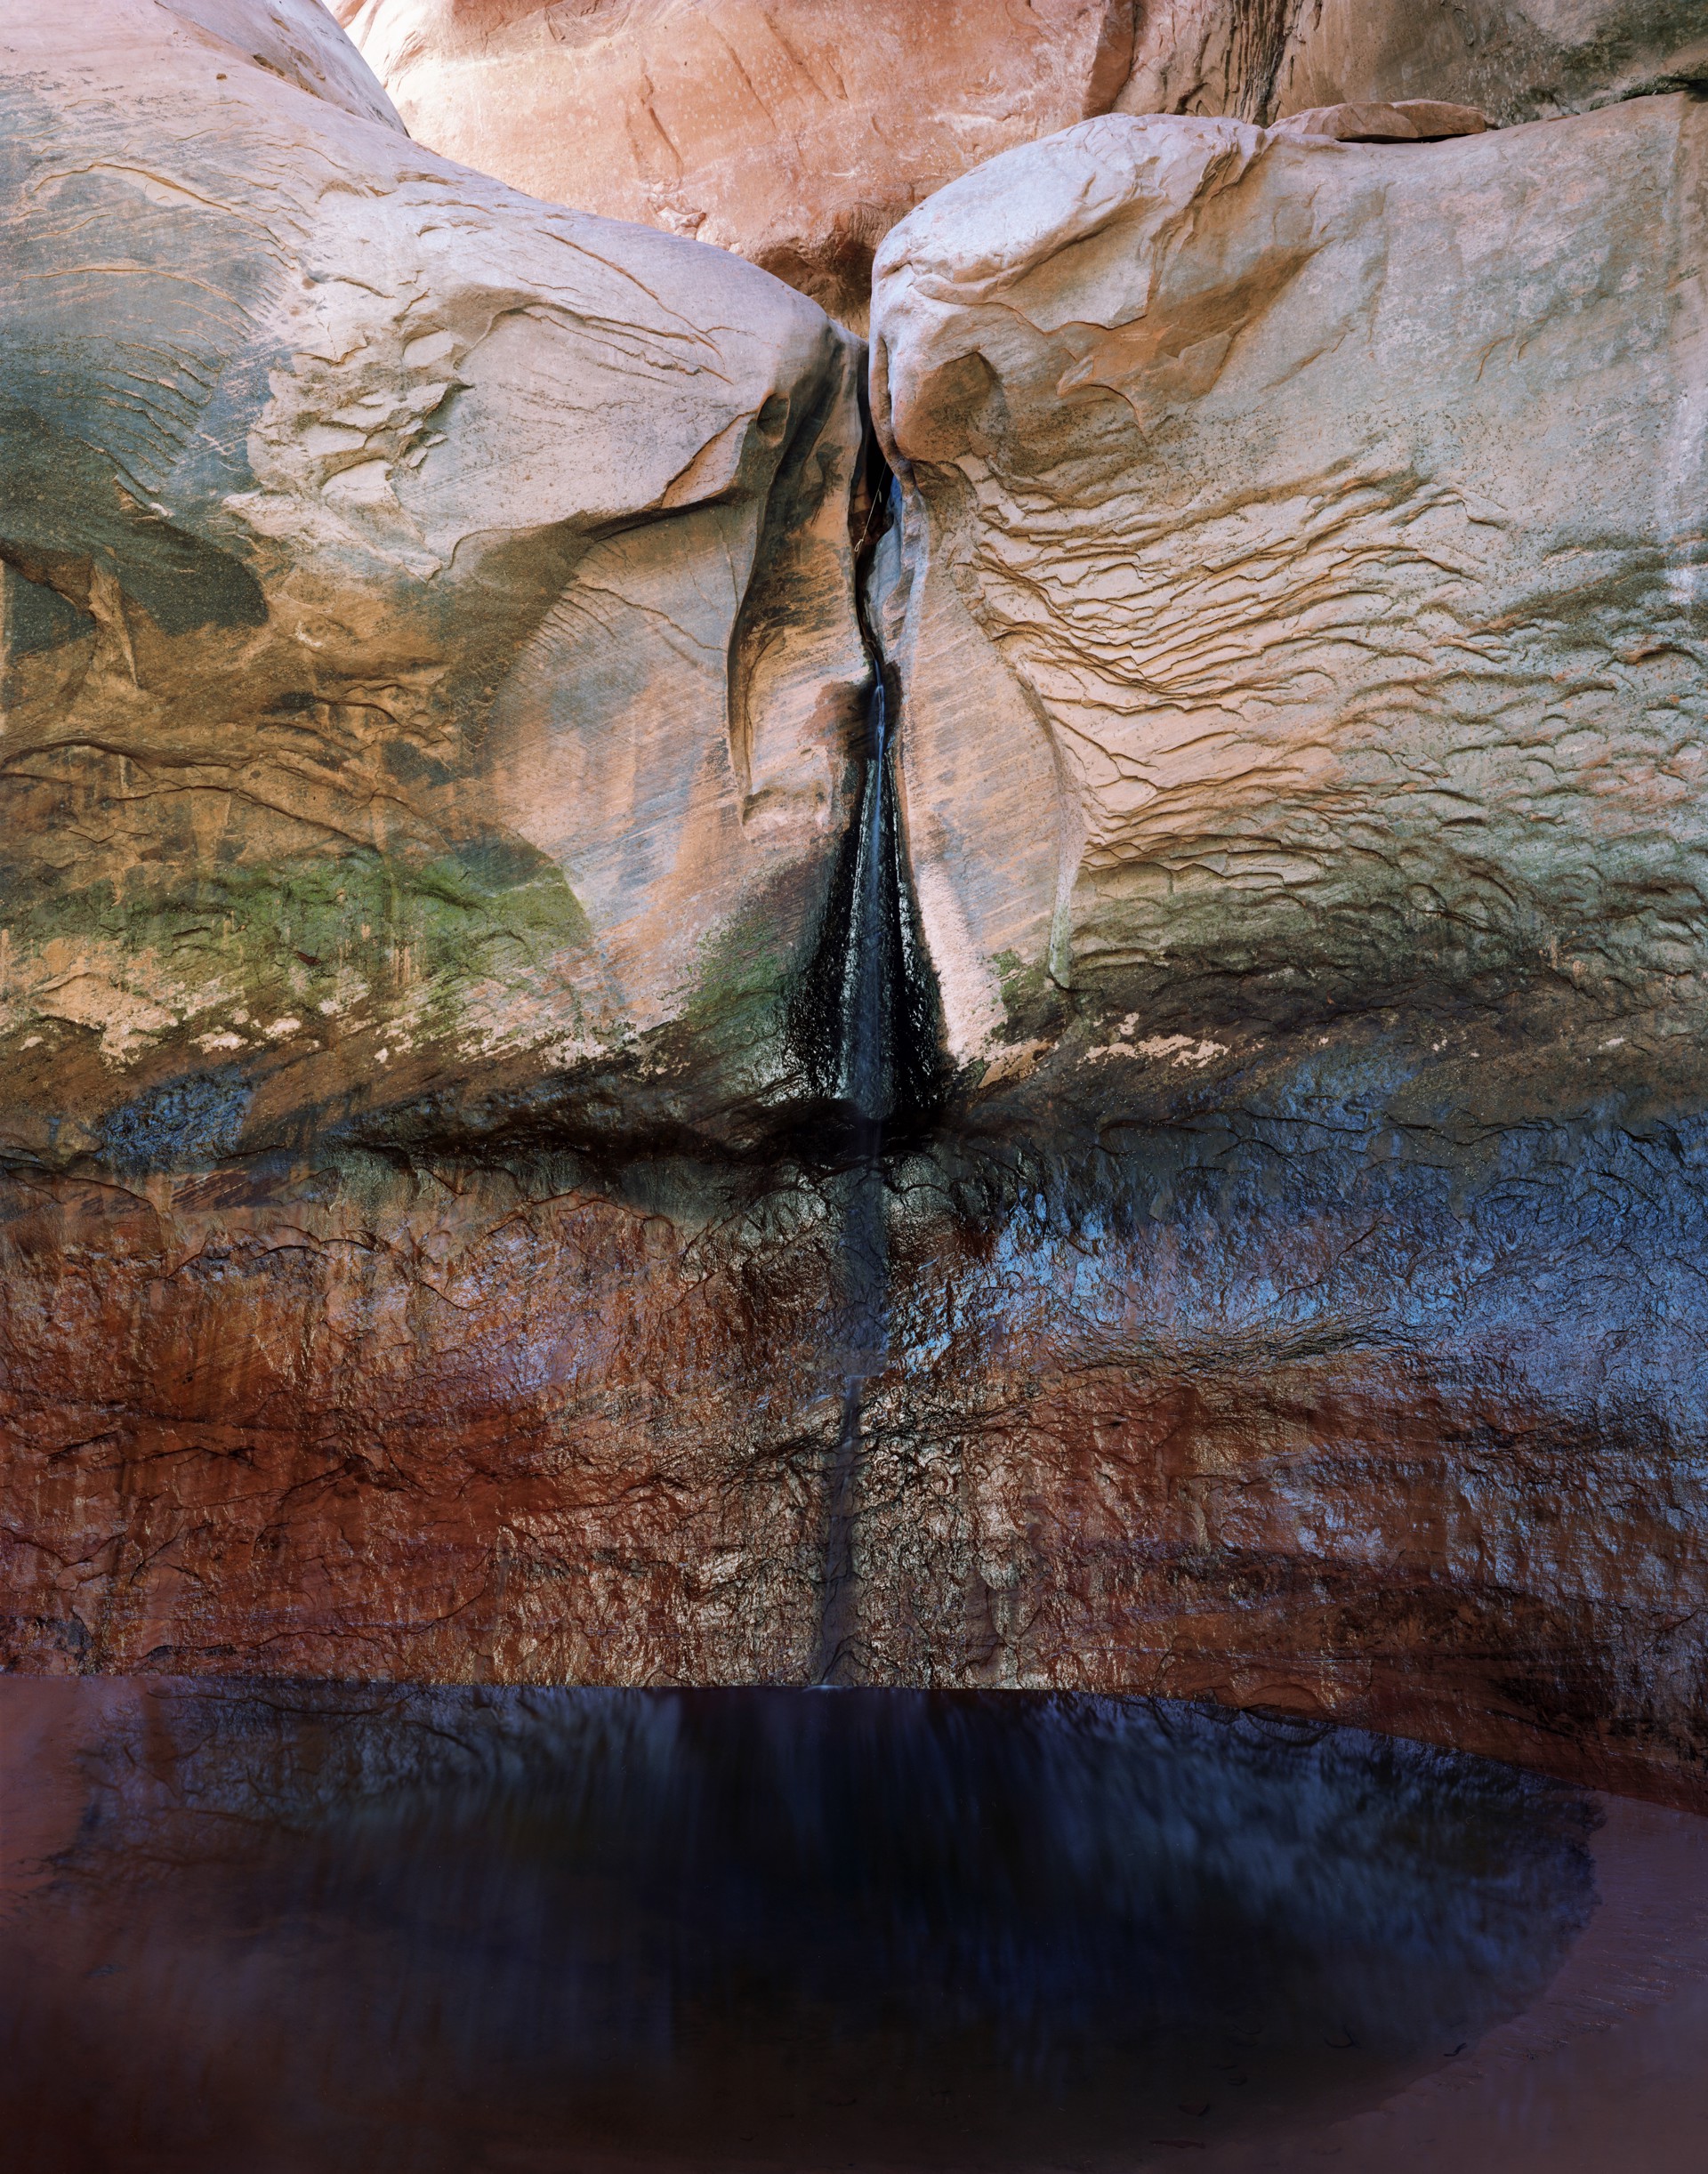 Rope Swing High Above a Receding Plunge Pool, Lake Powell/Glen Canyon, Utah by Laura McPhee